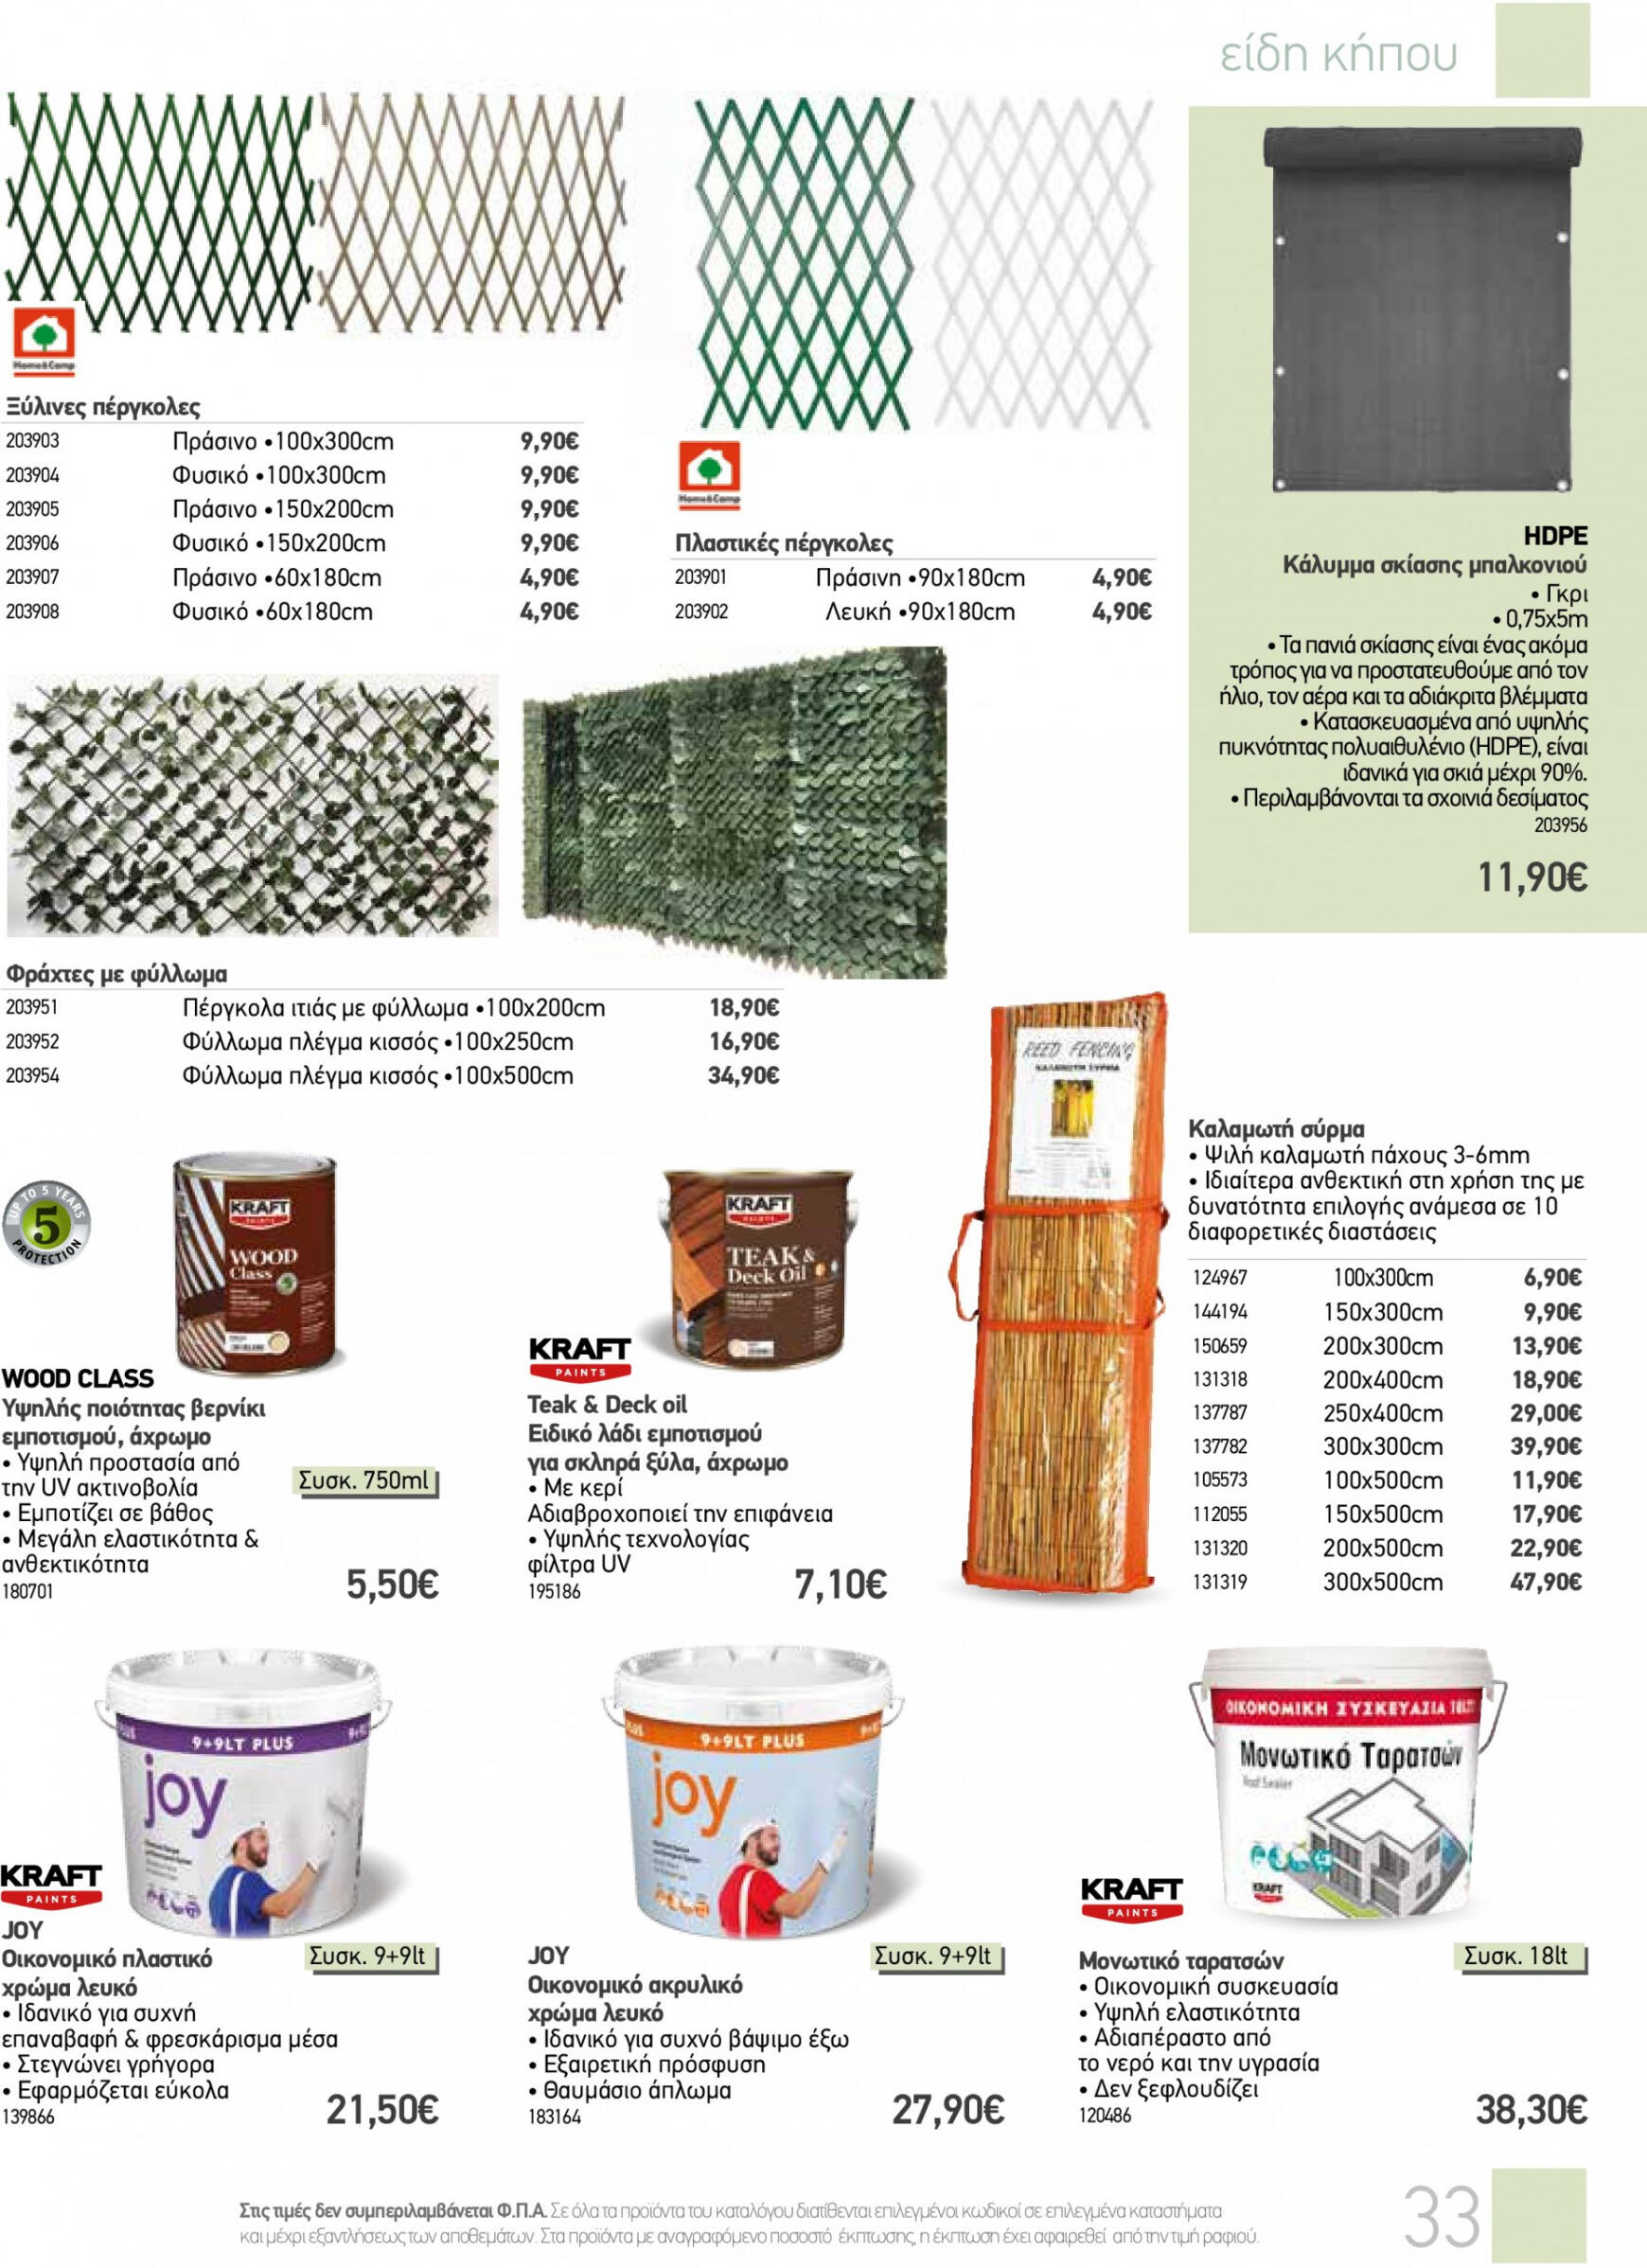 the-mart - The Mart - Κατάλογος Προϊόντων Εξωτερικού Χώρου φυλλάδιο ρεύματος 08/05 - 27/08 - page: 33